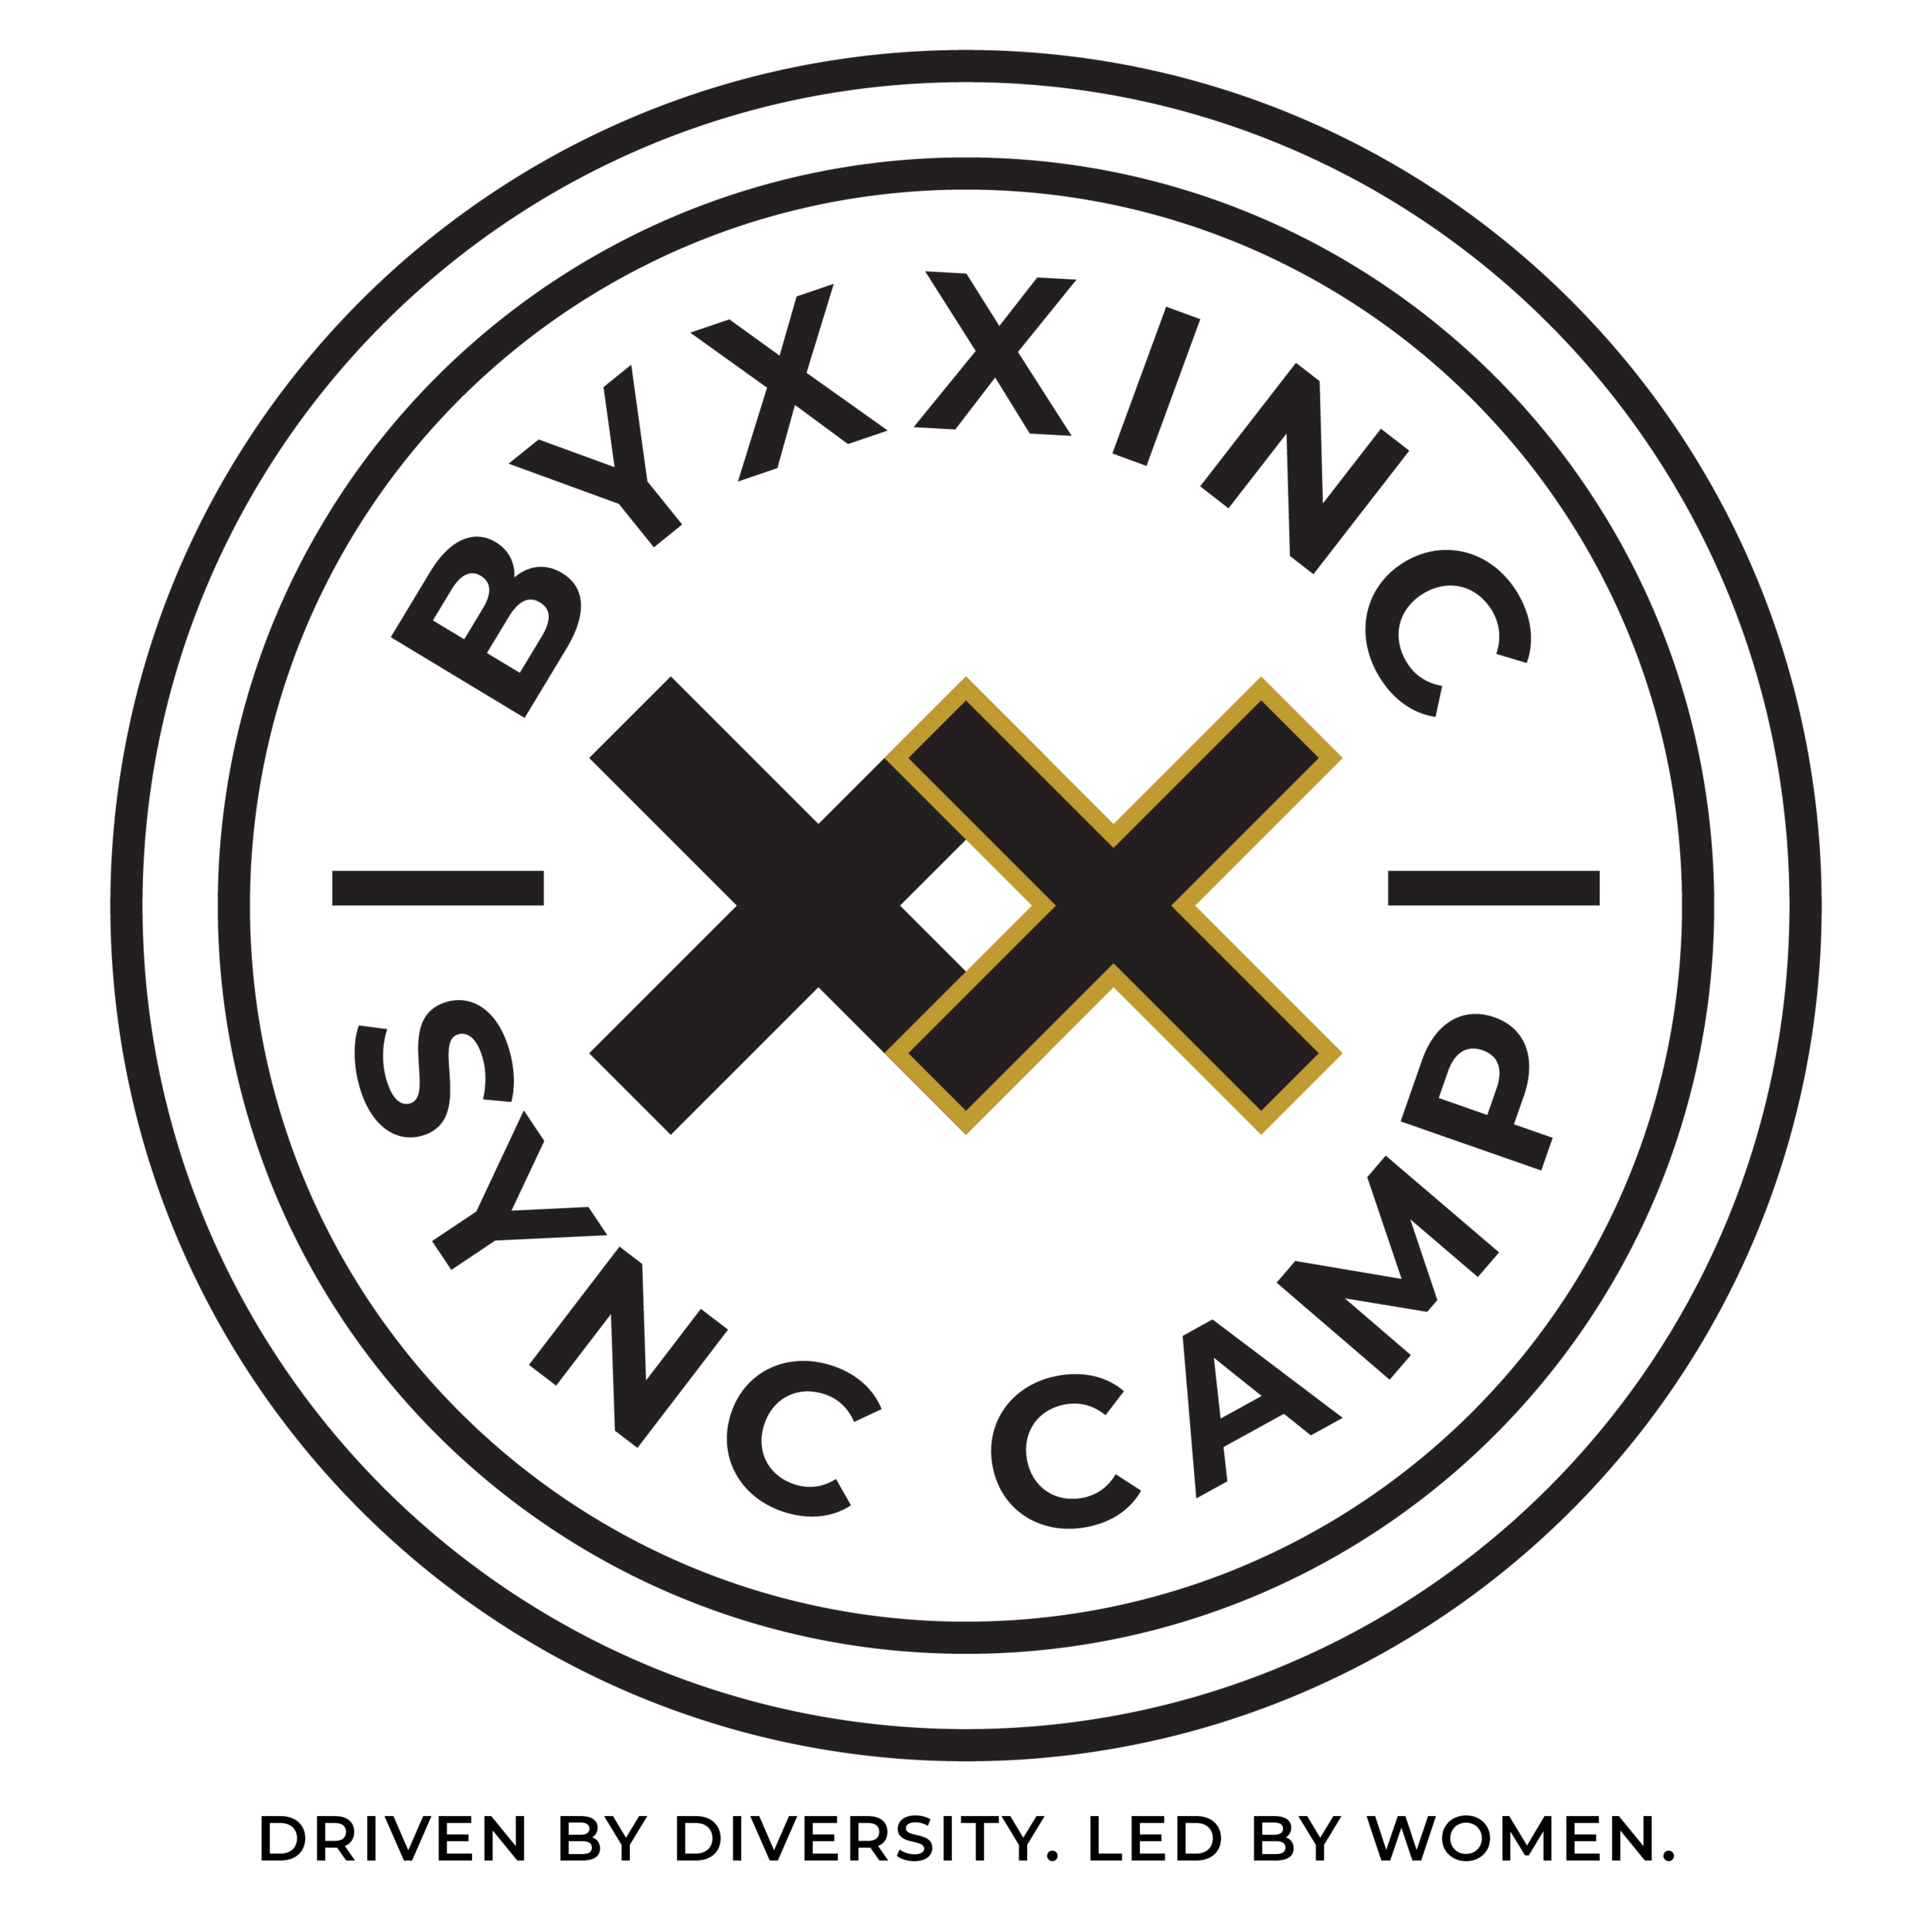 BYXXINC SYNC CAMP LOGO (TEXT UNDERNEATH).png